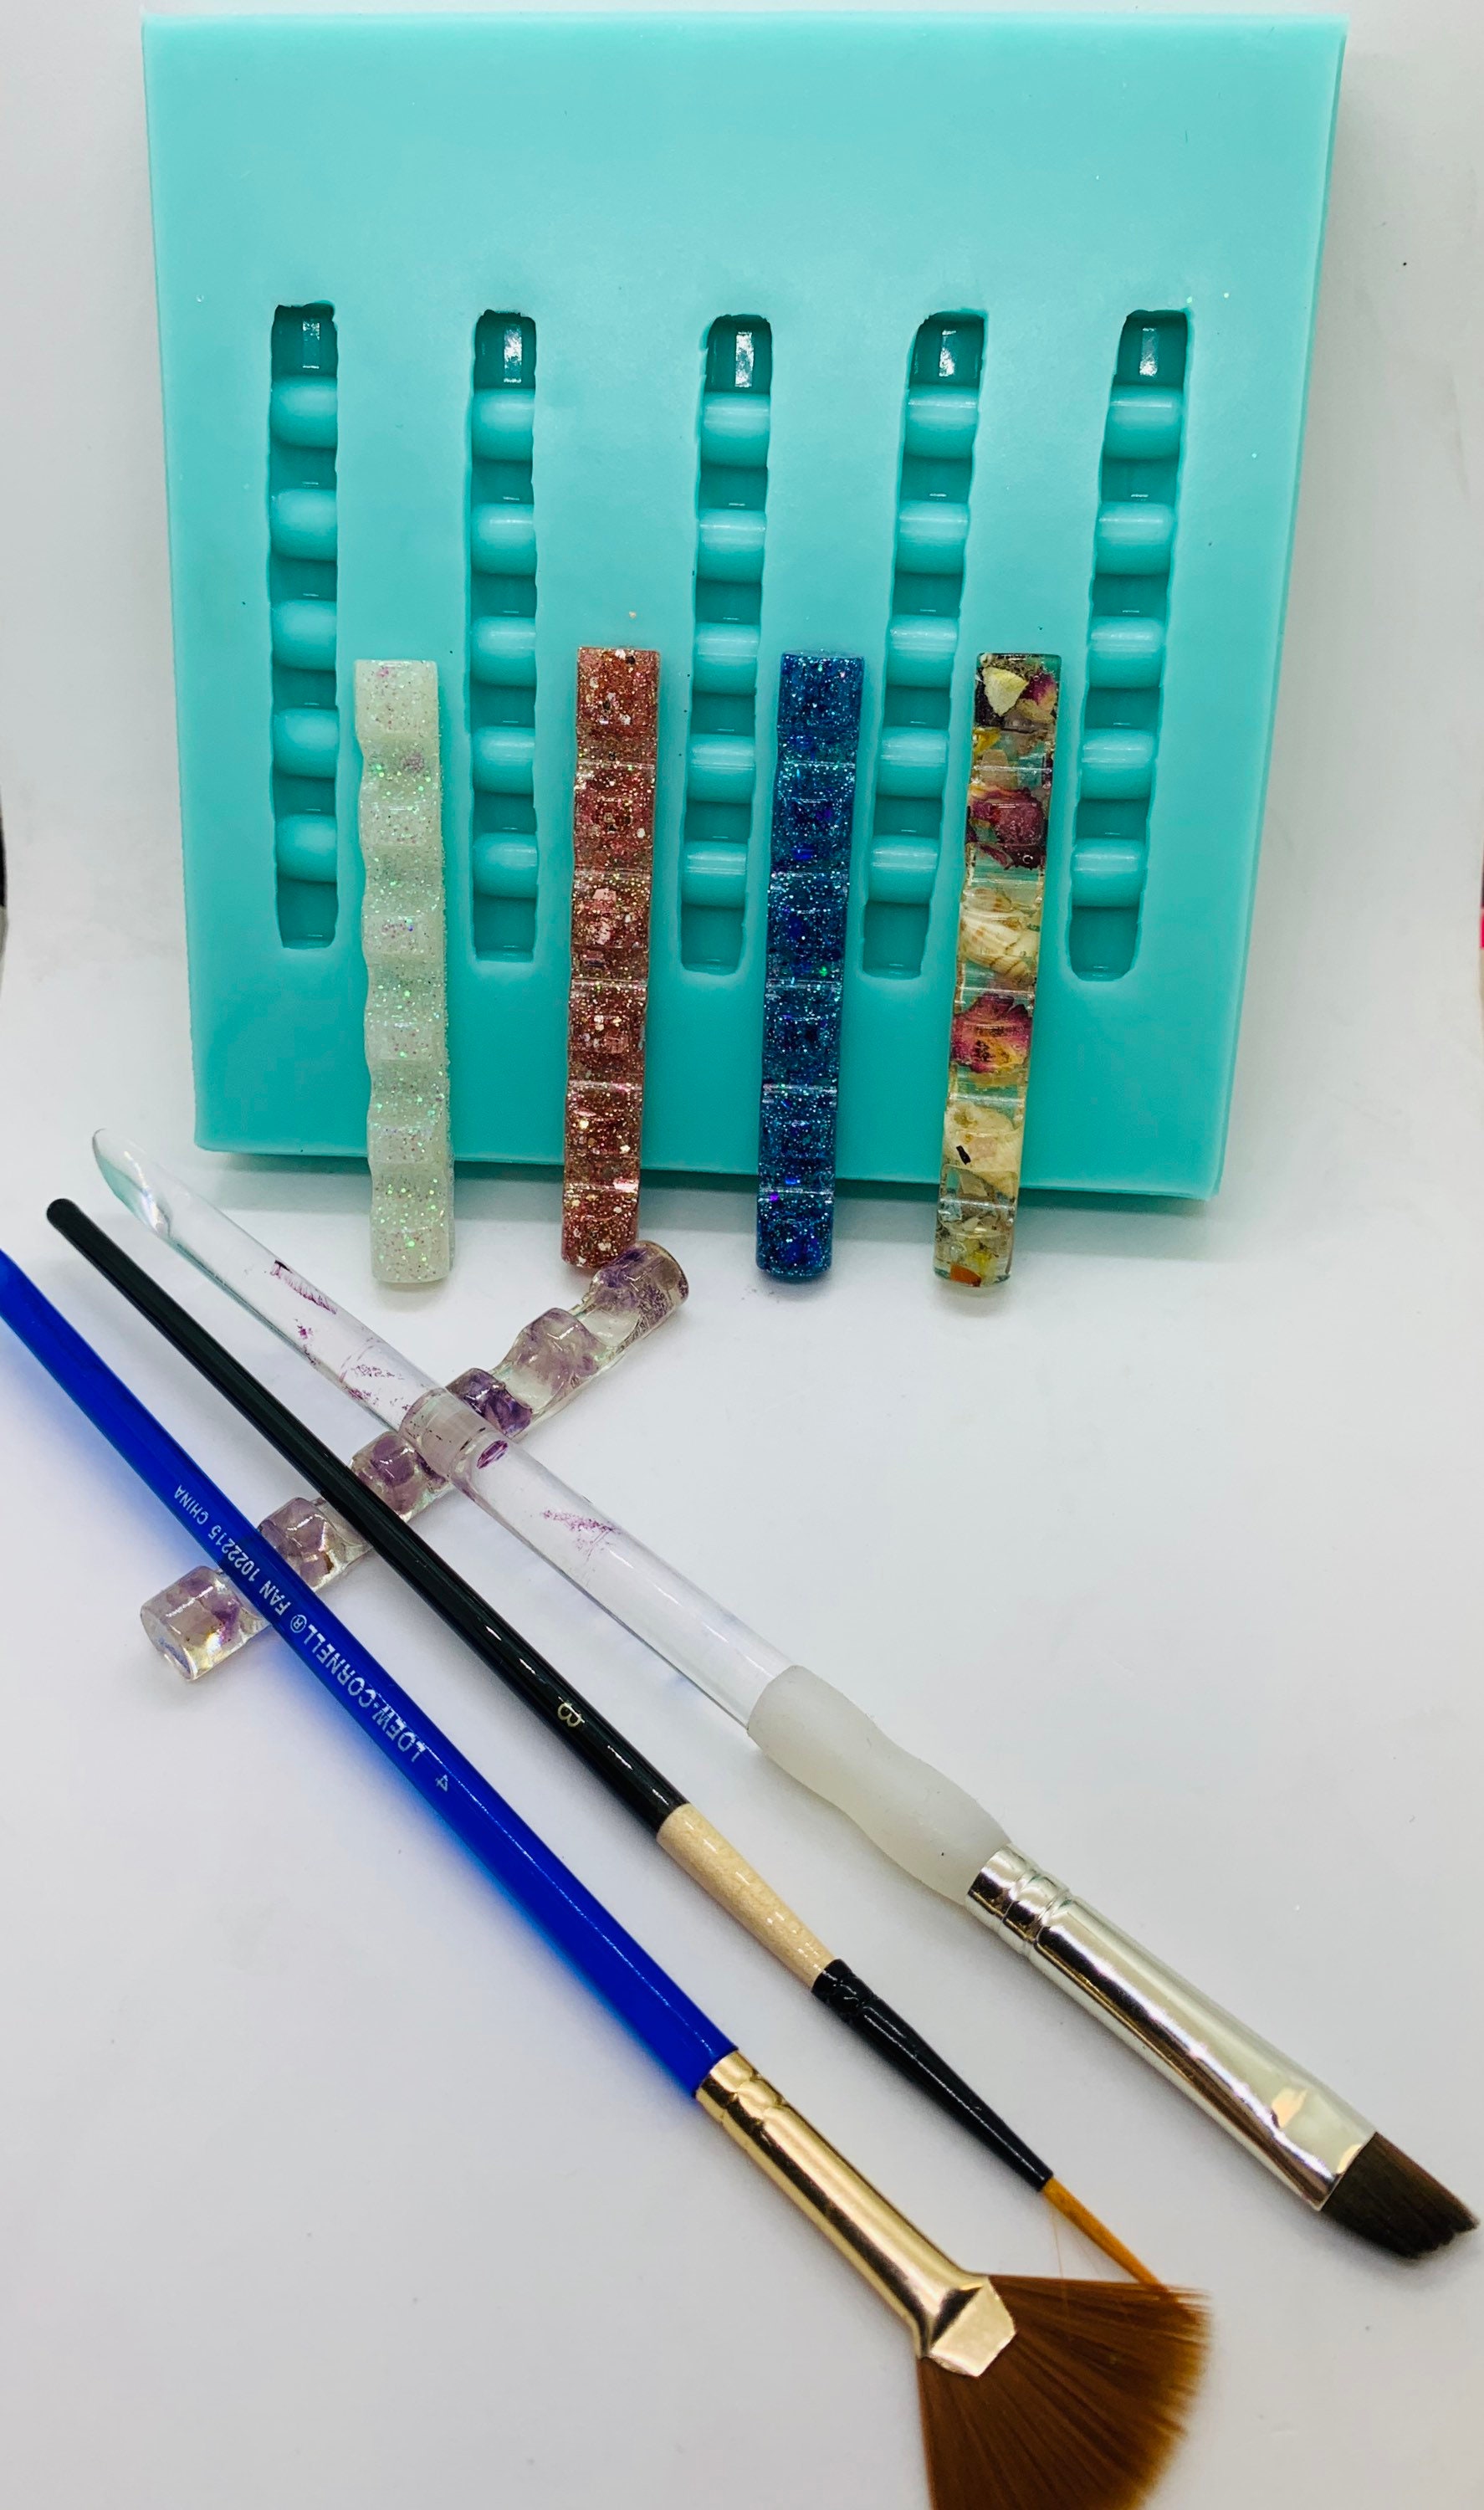 Bueautybox Acrylic Nail Brush Display Holder, Round/Heart Shaped 12 Holes Make-Up Brush Pen Stand Rack Display Organizer, Size: 8.6, Gold